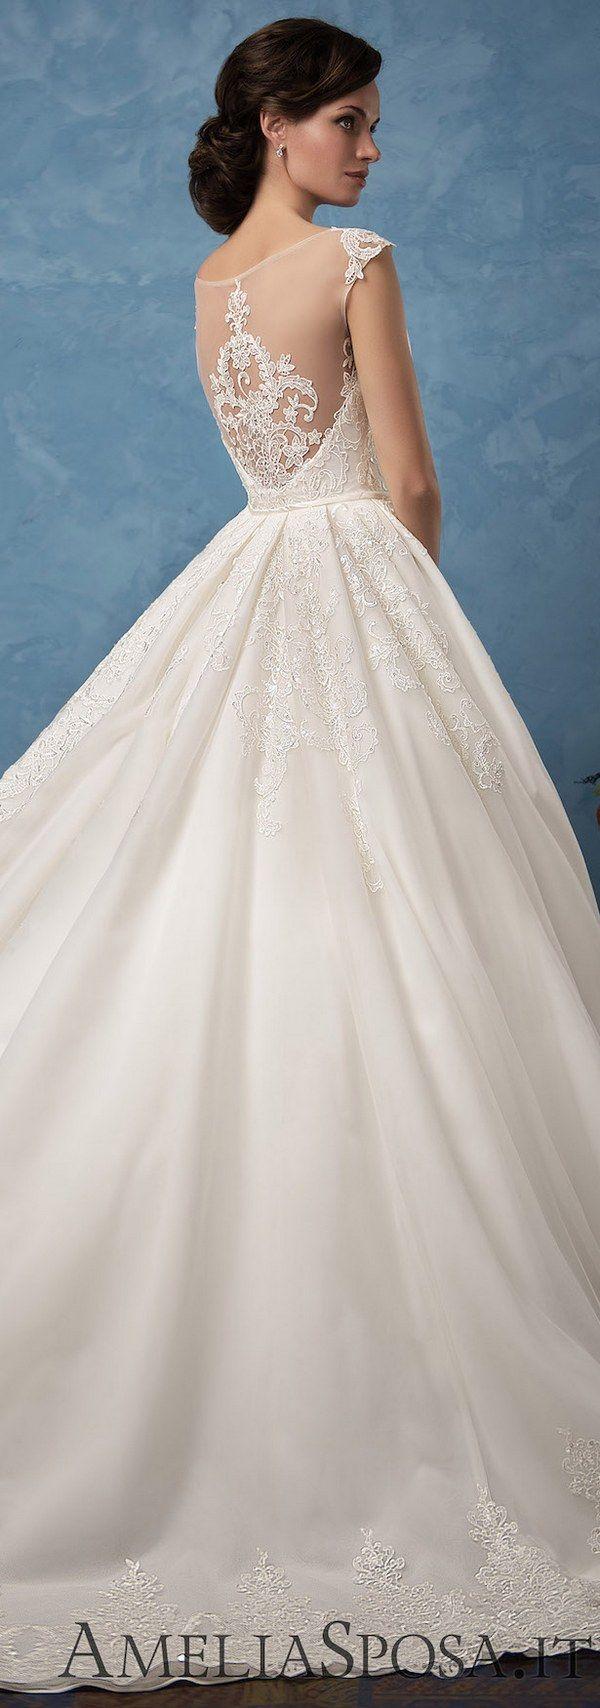 Wedding - Amelia Sposa 2017 Wedding Dresses